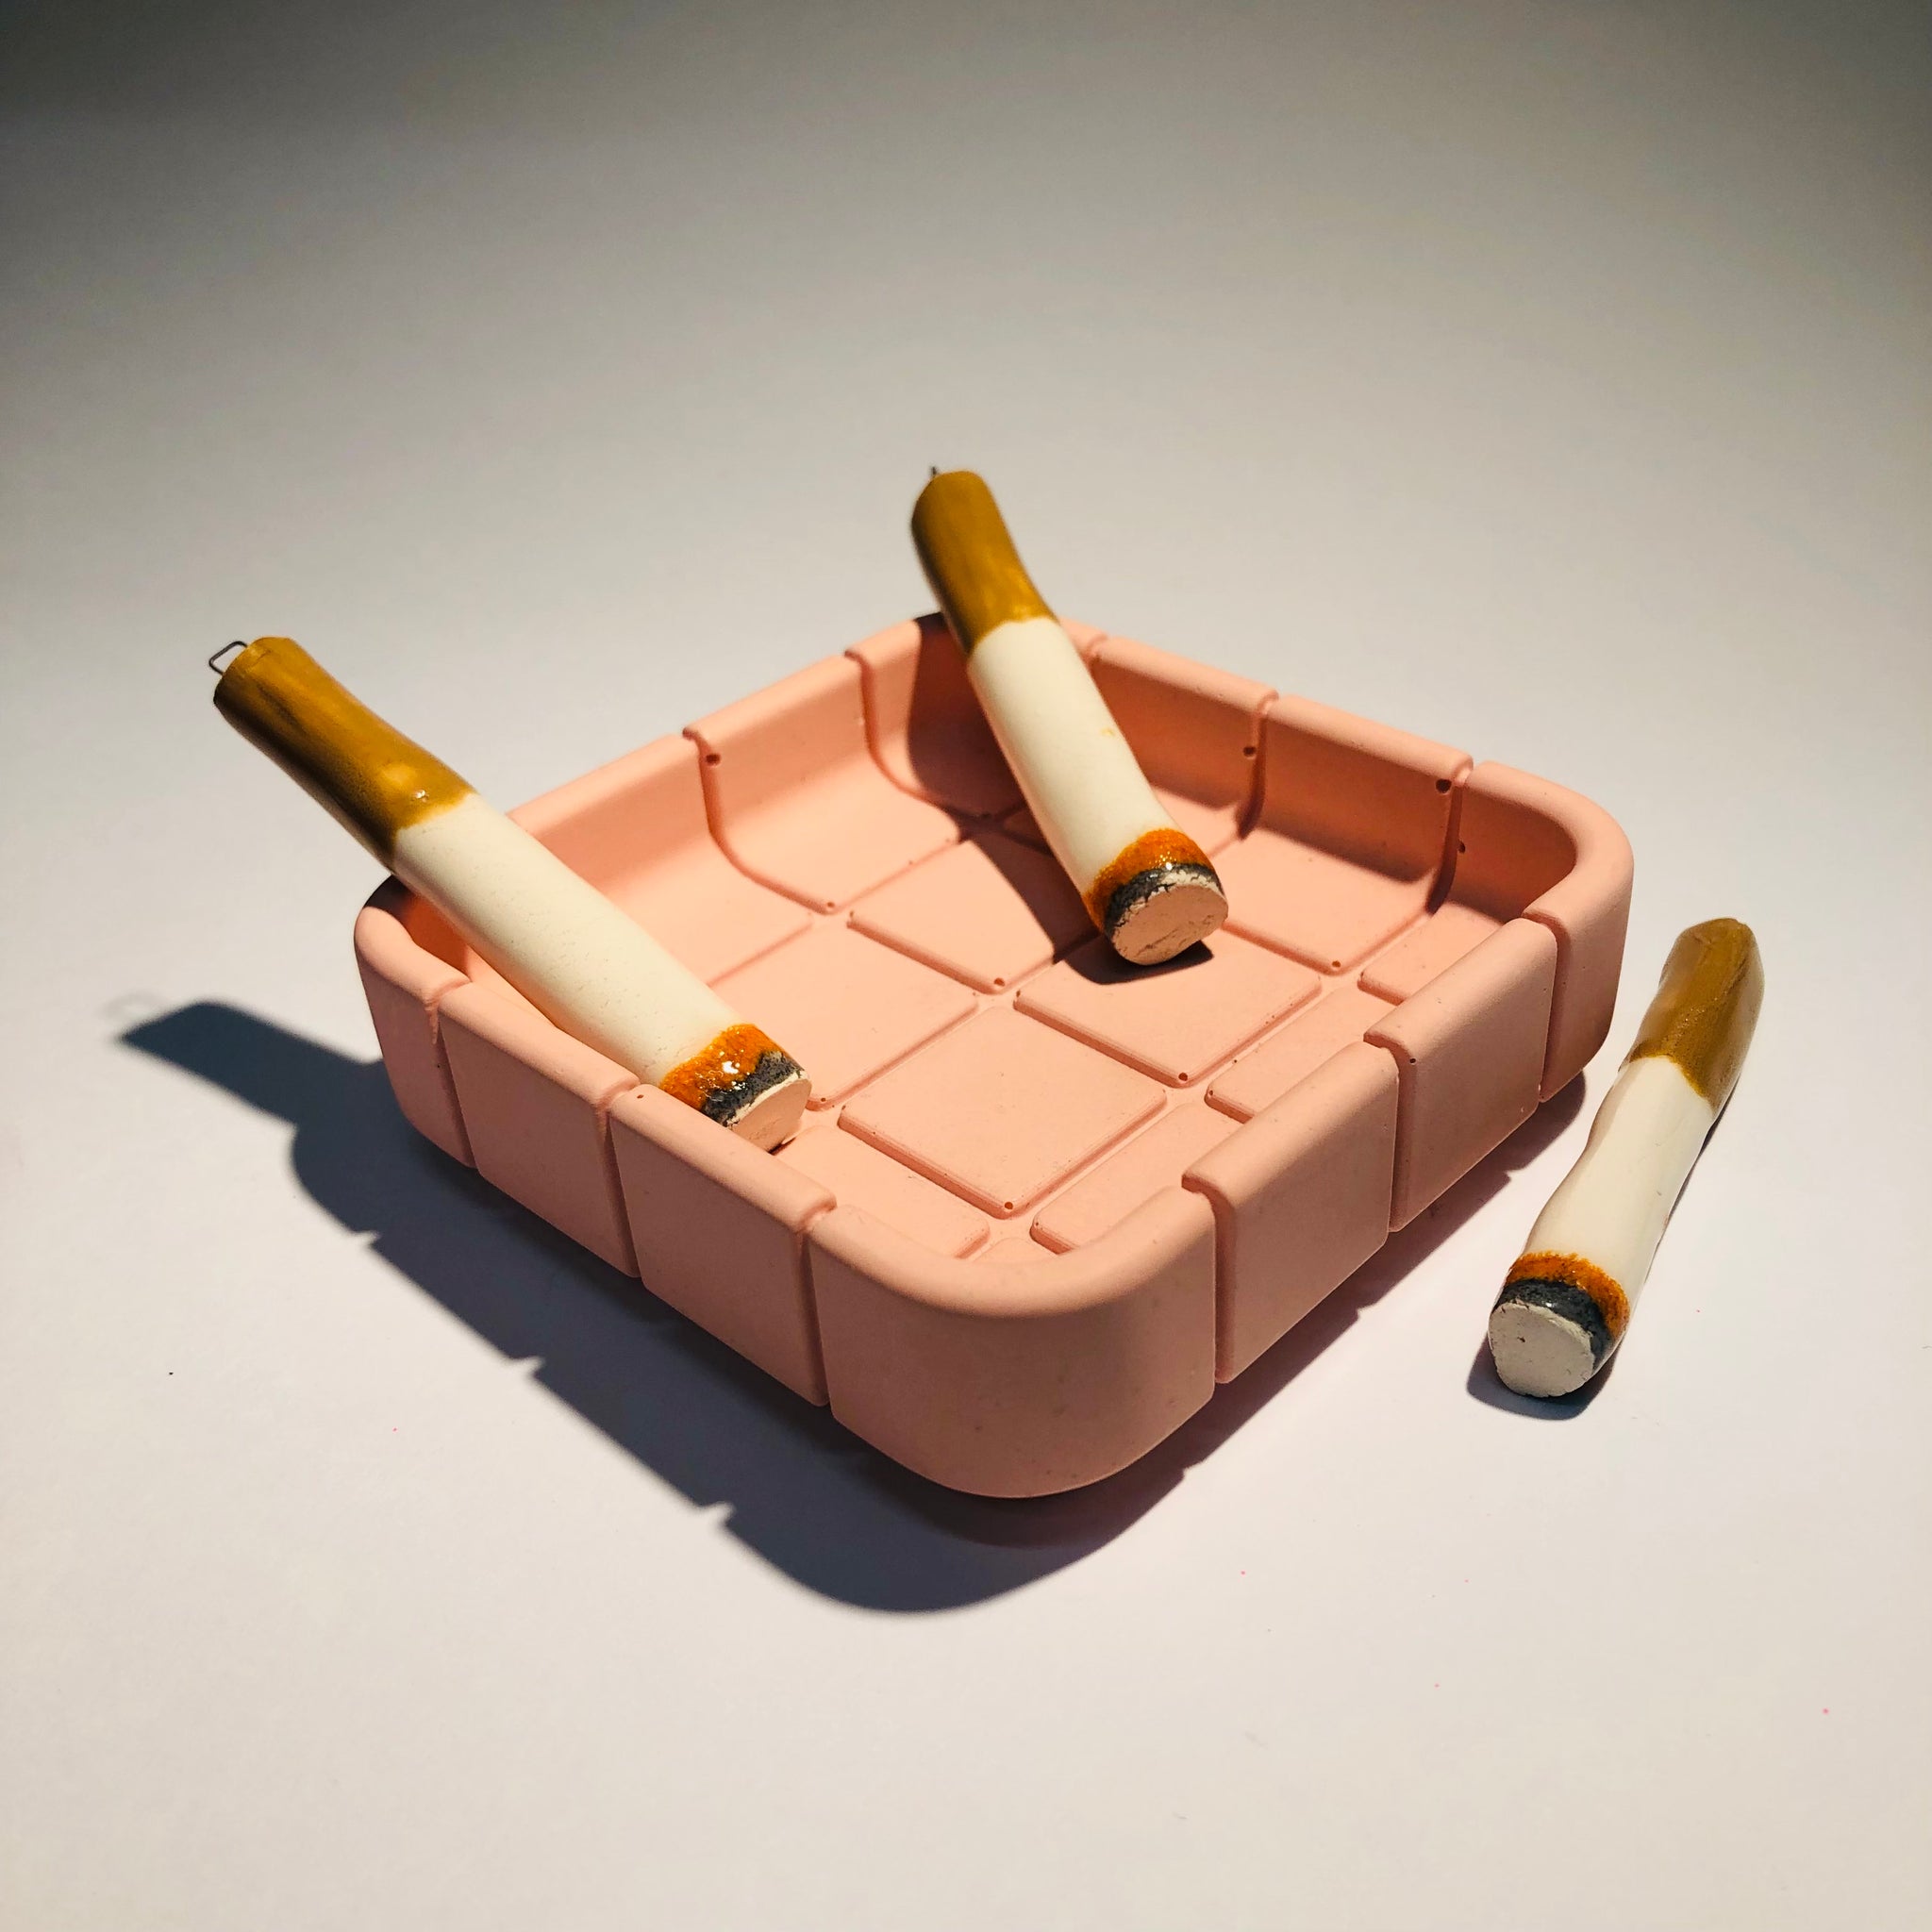 Cigarette Ceramic Figure